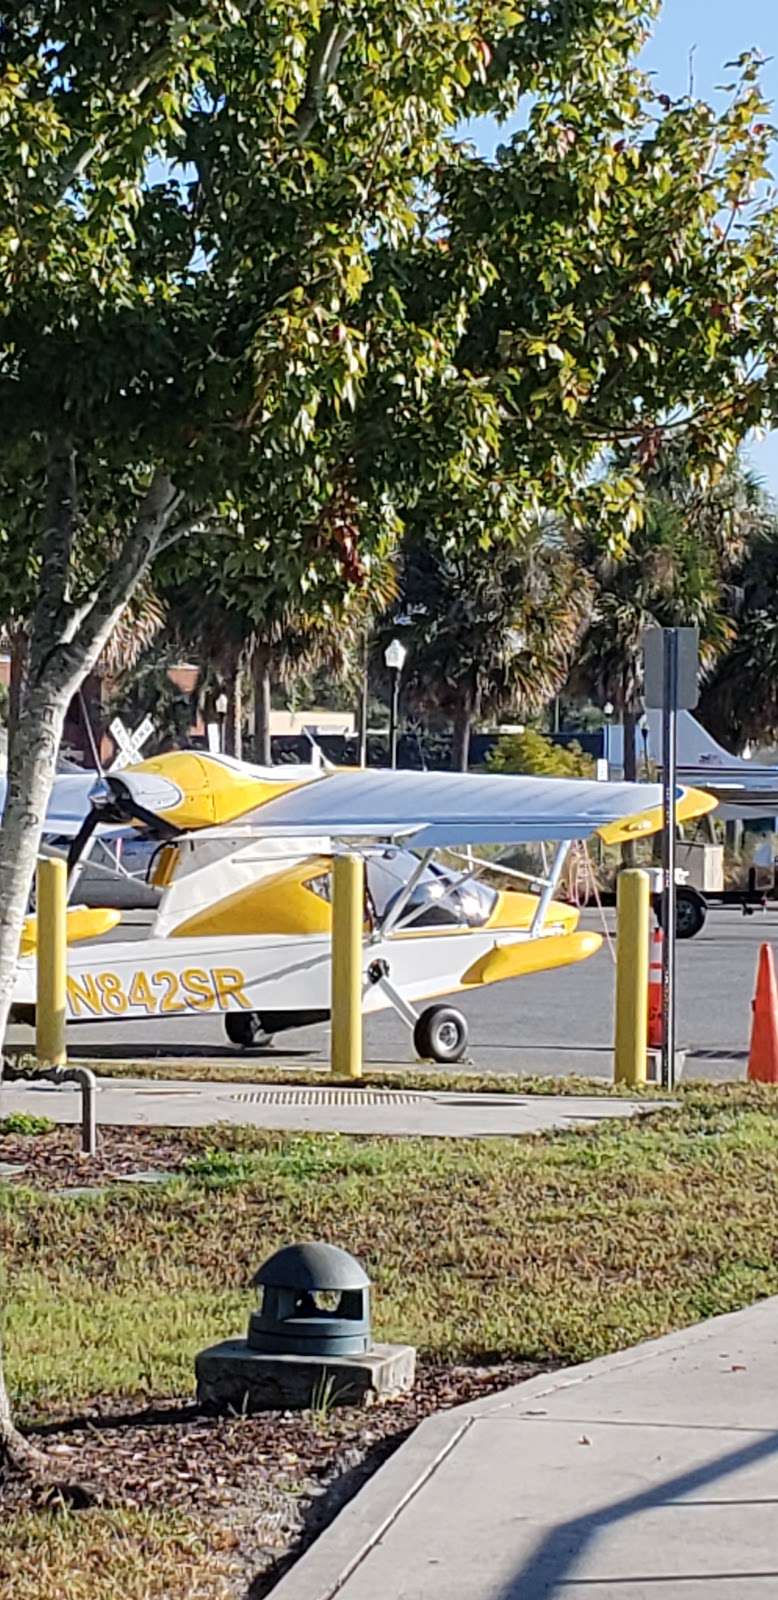 City of Tavares - Seaplane Marina Parking Area | 100-198 E Ruby St, Tavares, FL 32778, USA